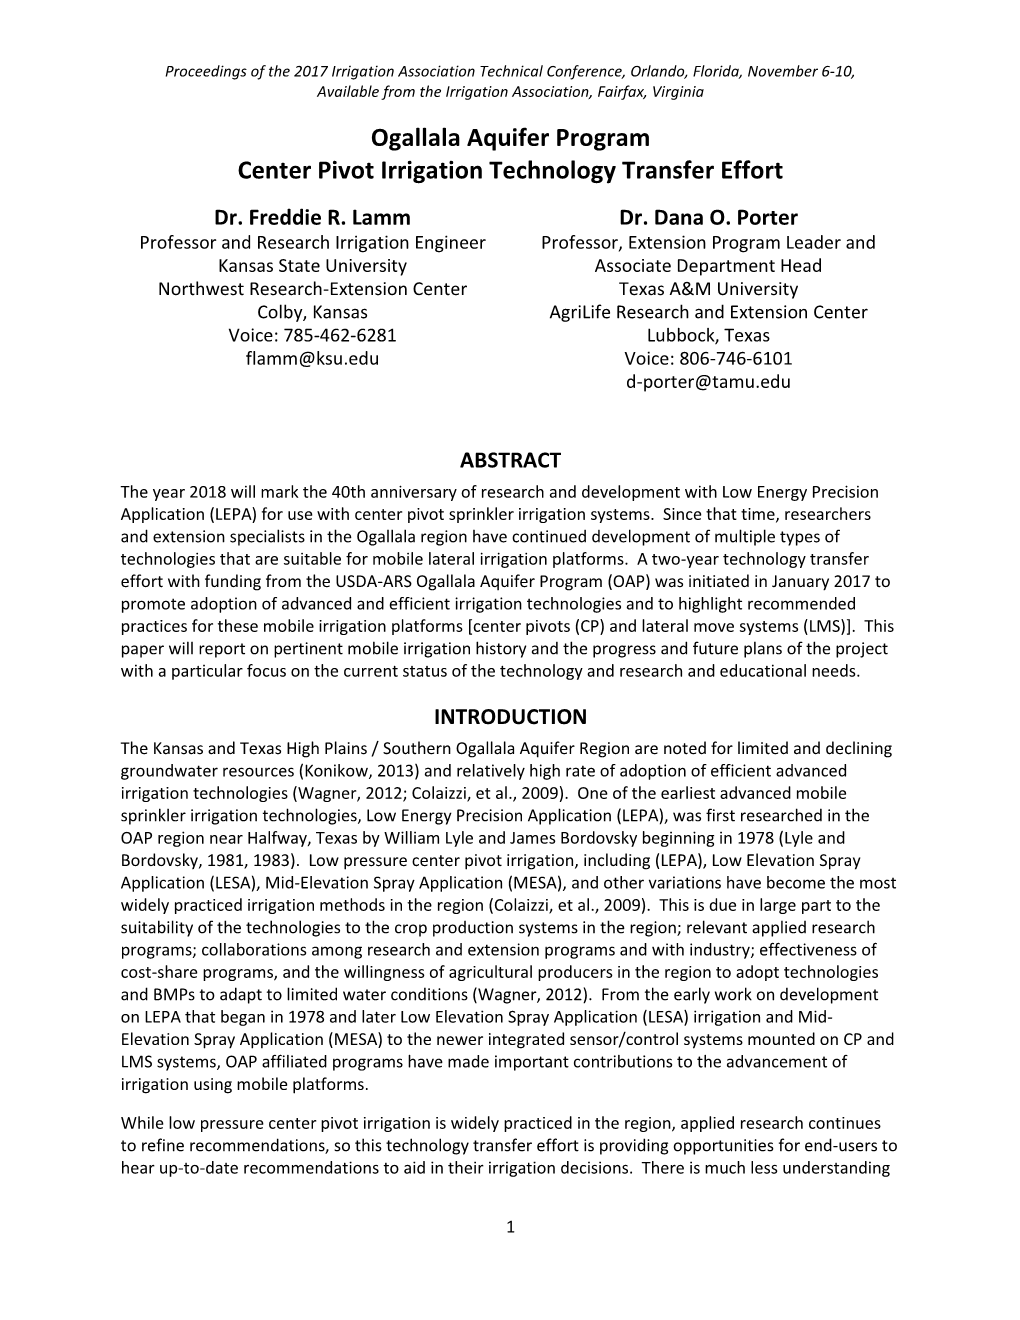 Ogallala Aquifer Program Center Pivot Irrigation Technology Transfer Effort Dr